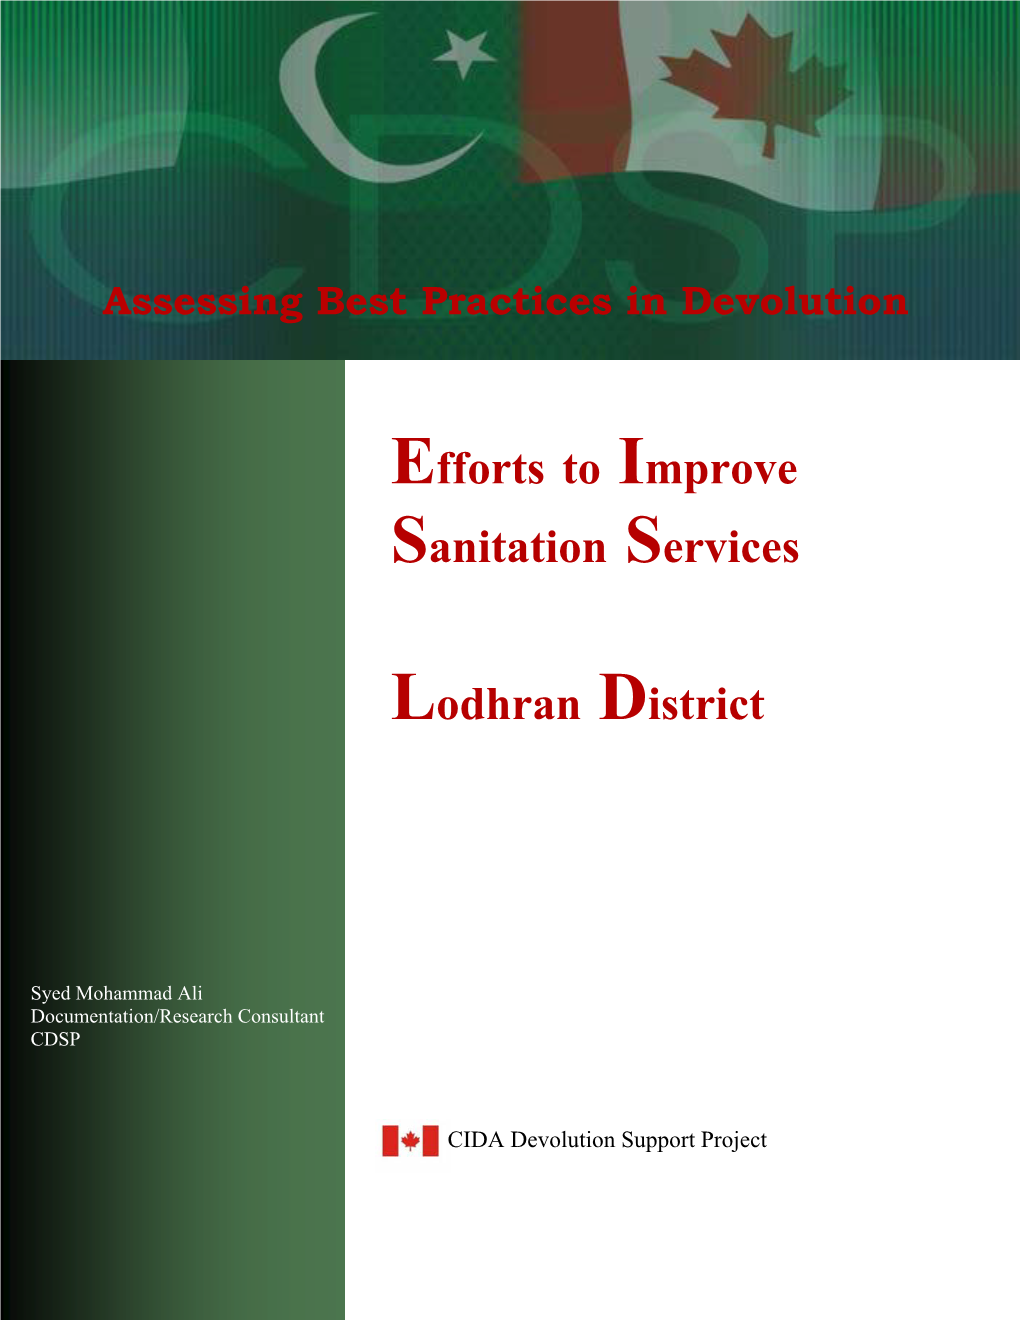 Efforts to Improve Sanitation Services in Lodhran